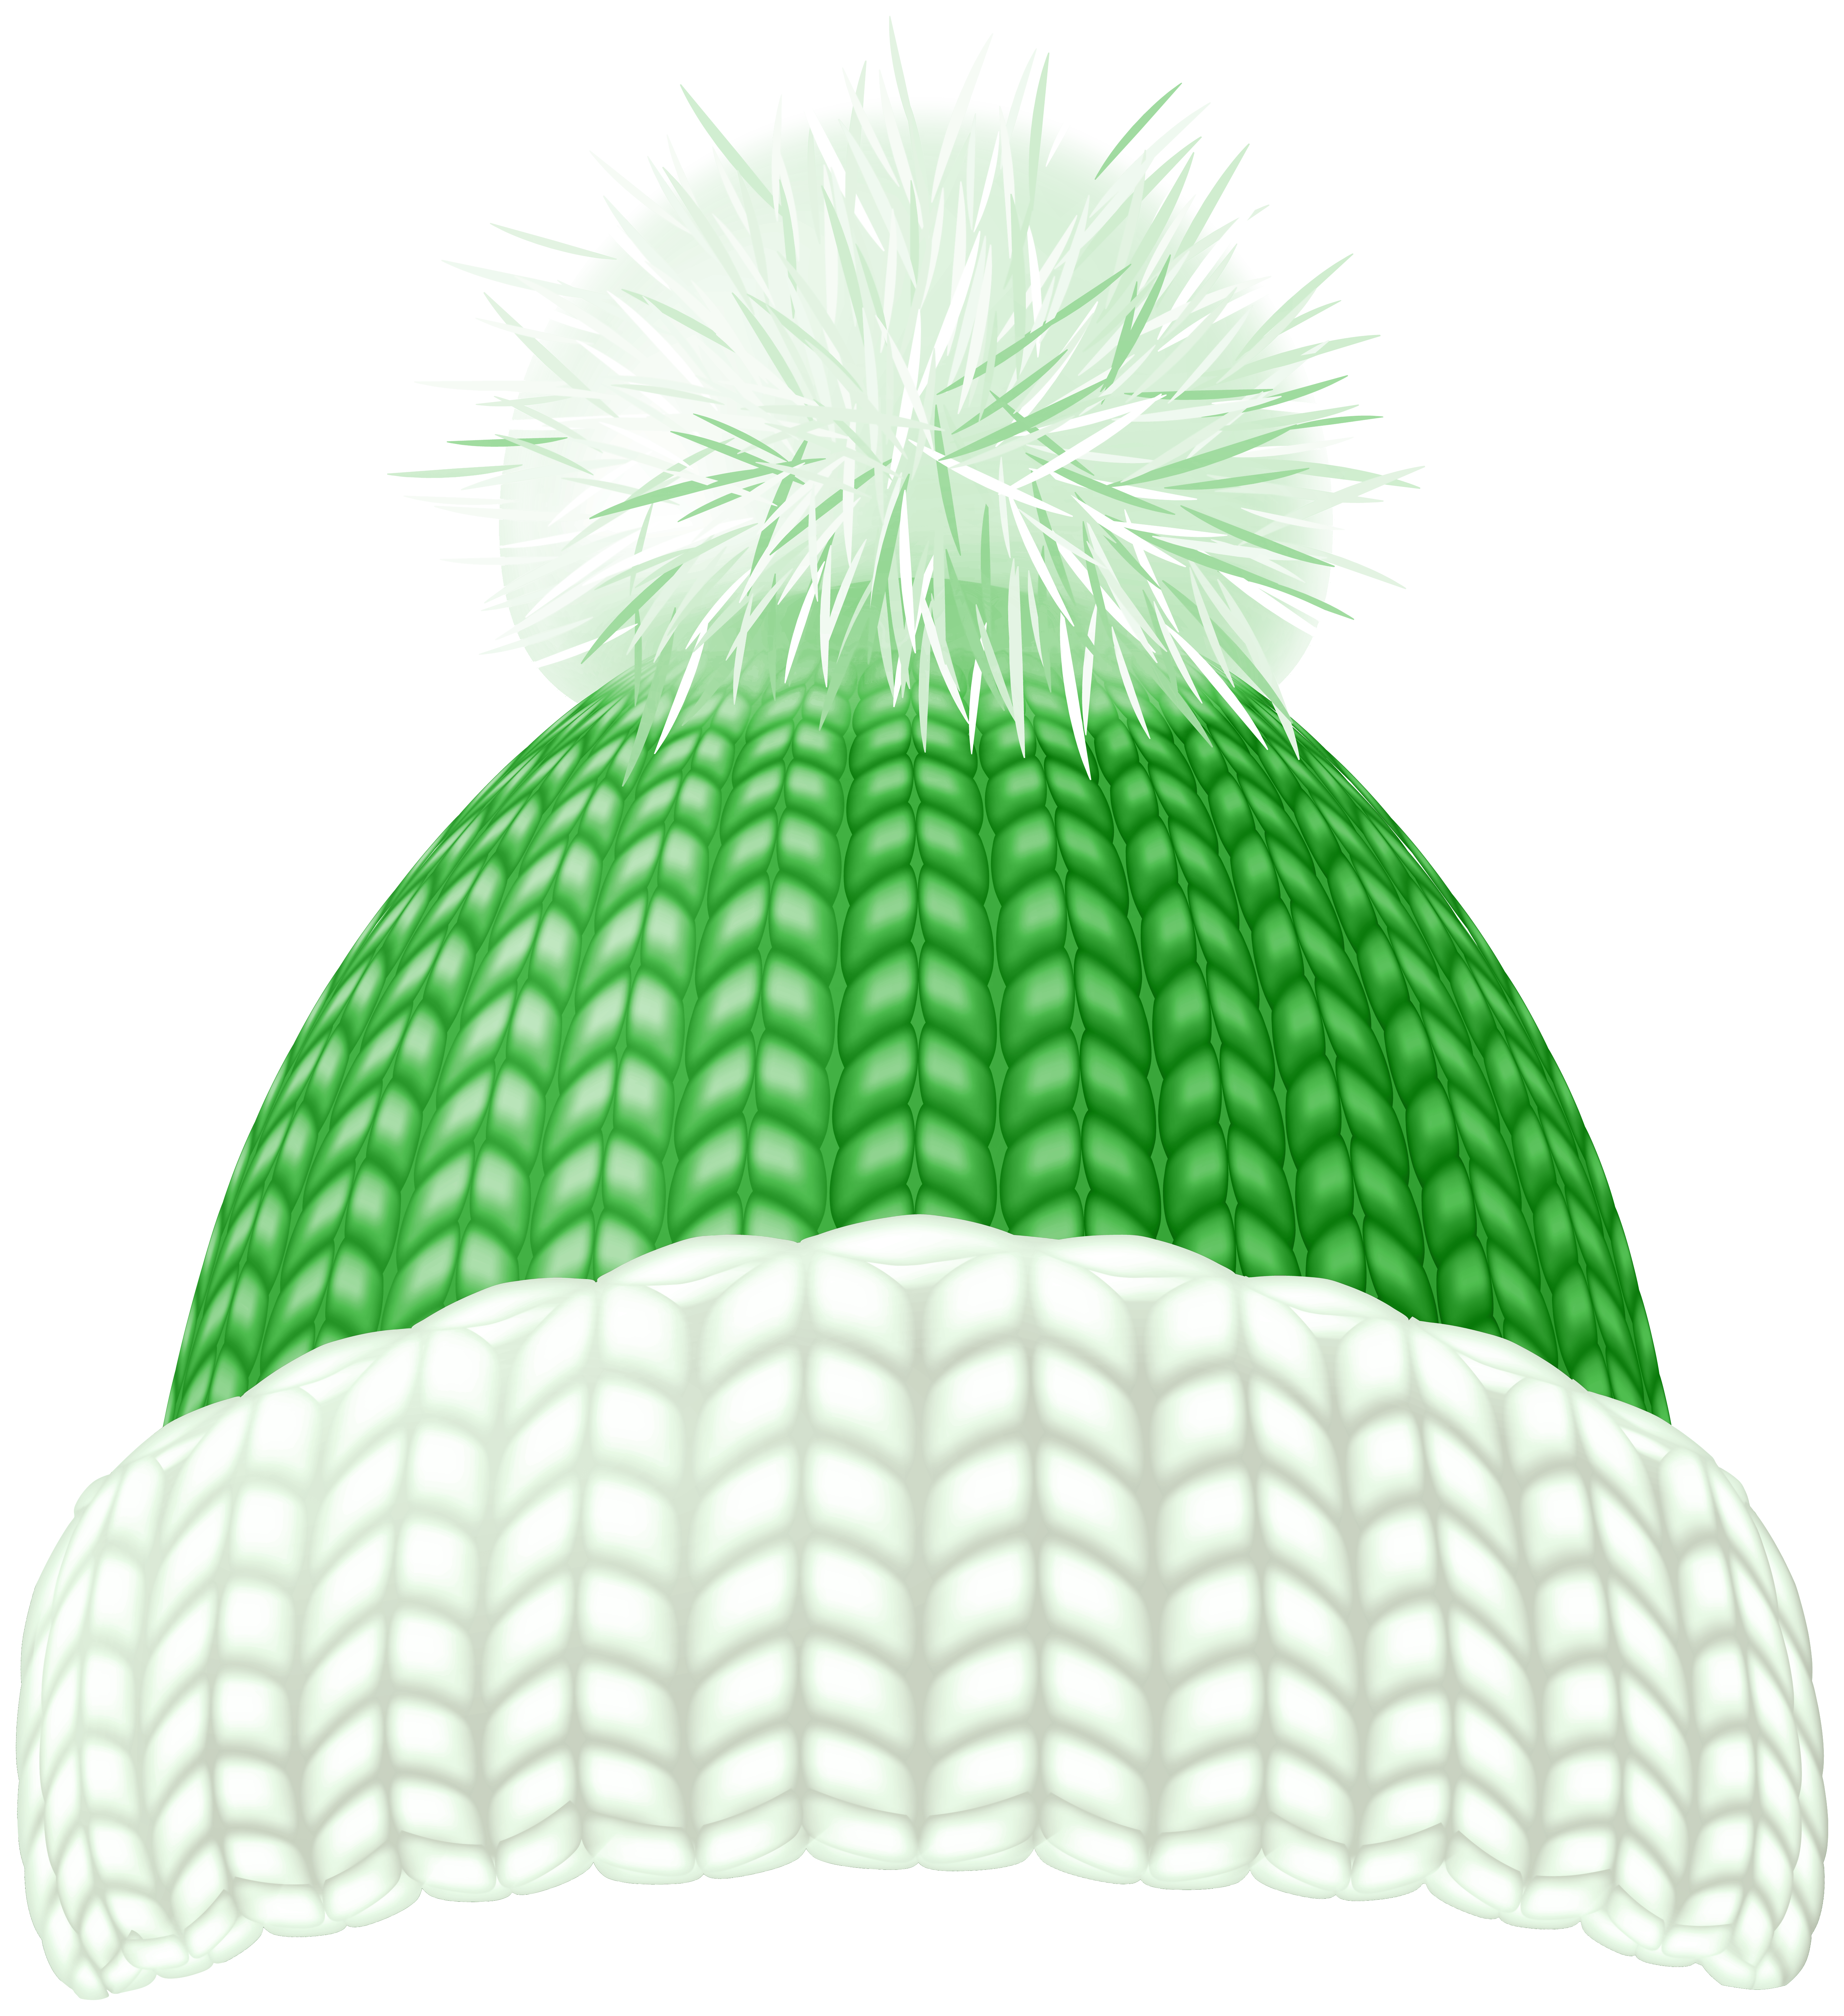 hats clipart winter